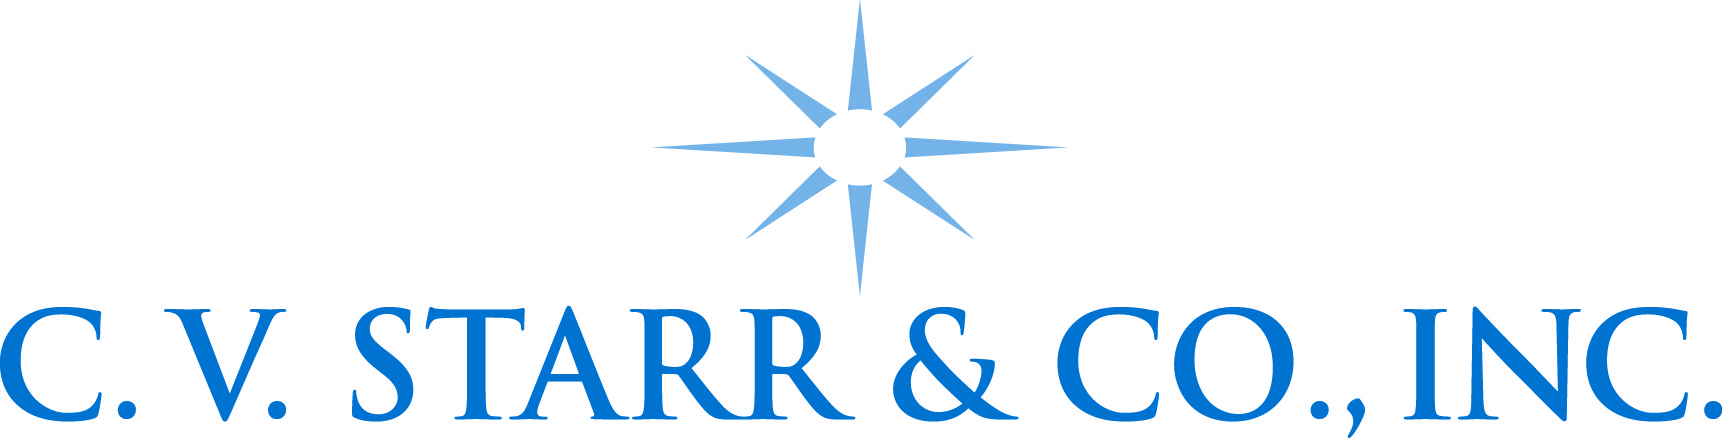 CV Starr & Co, Inc logo